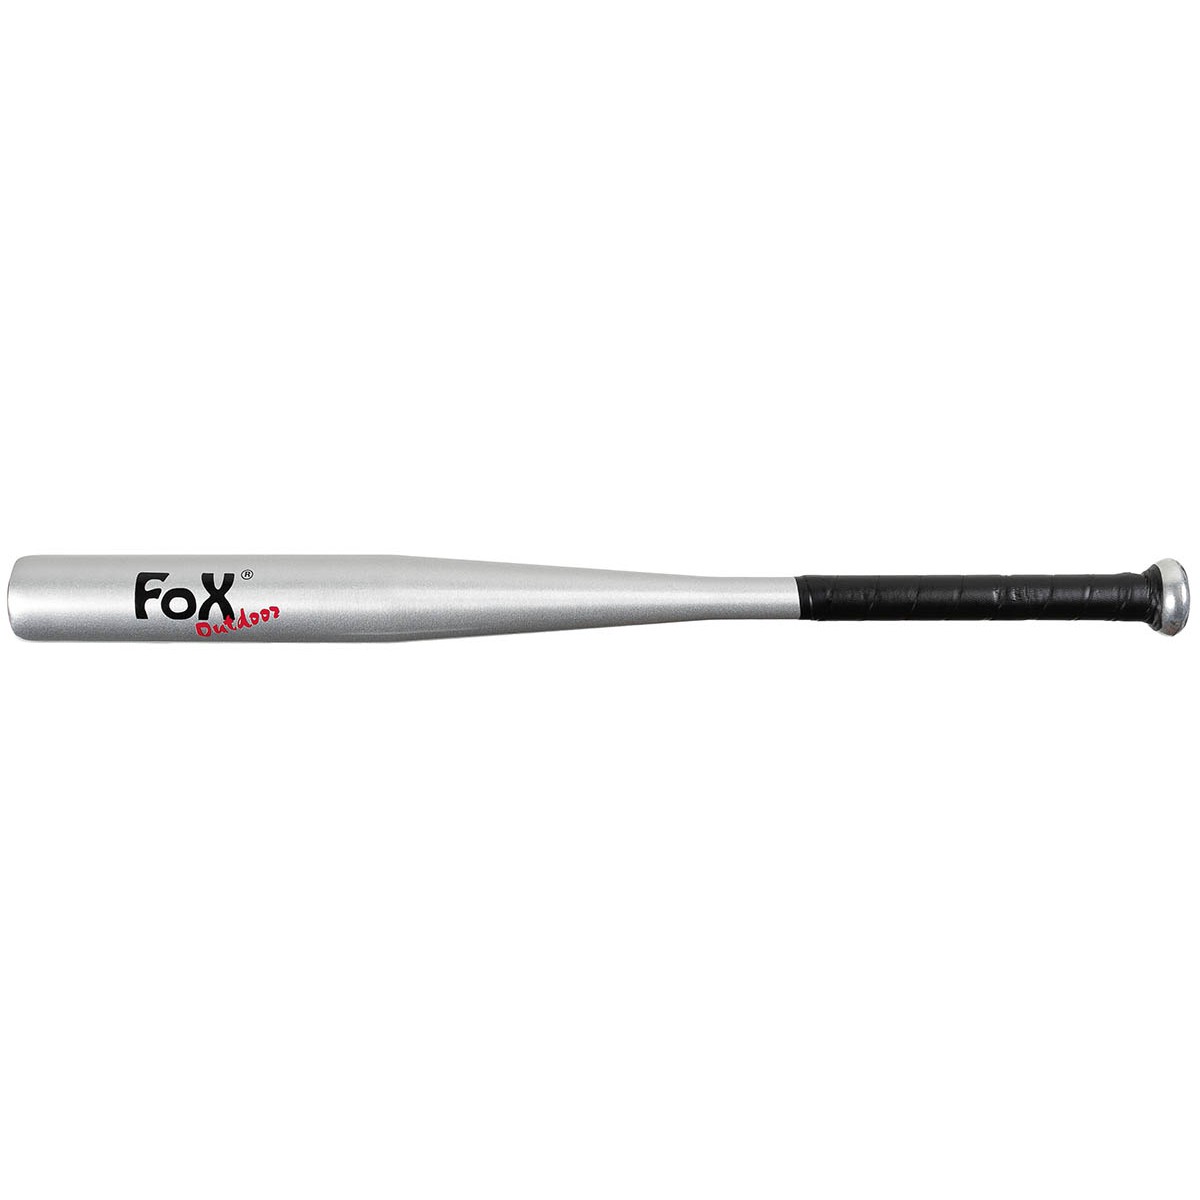 Batte de baseball FOX alu 66 cm (26